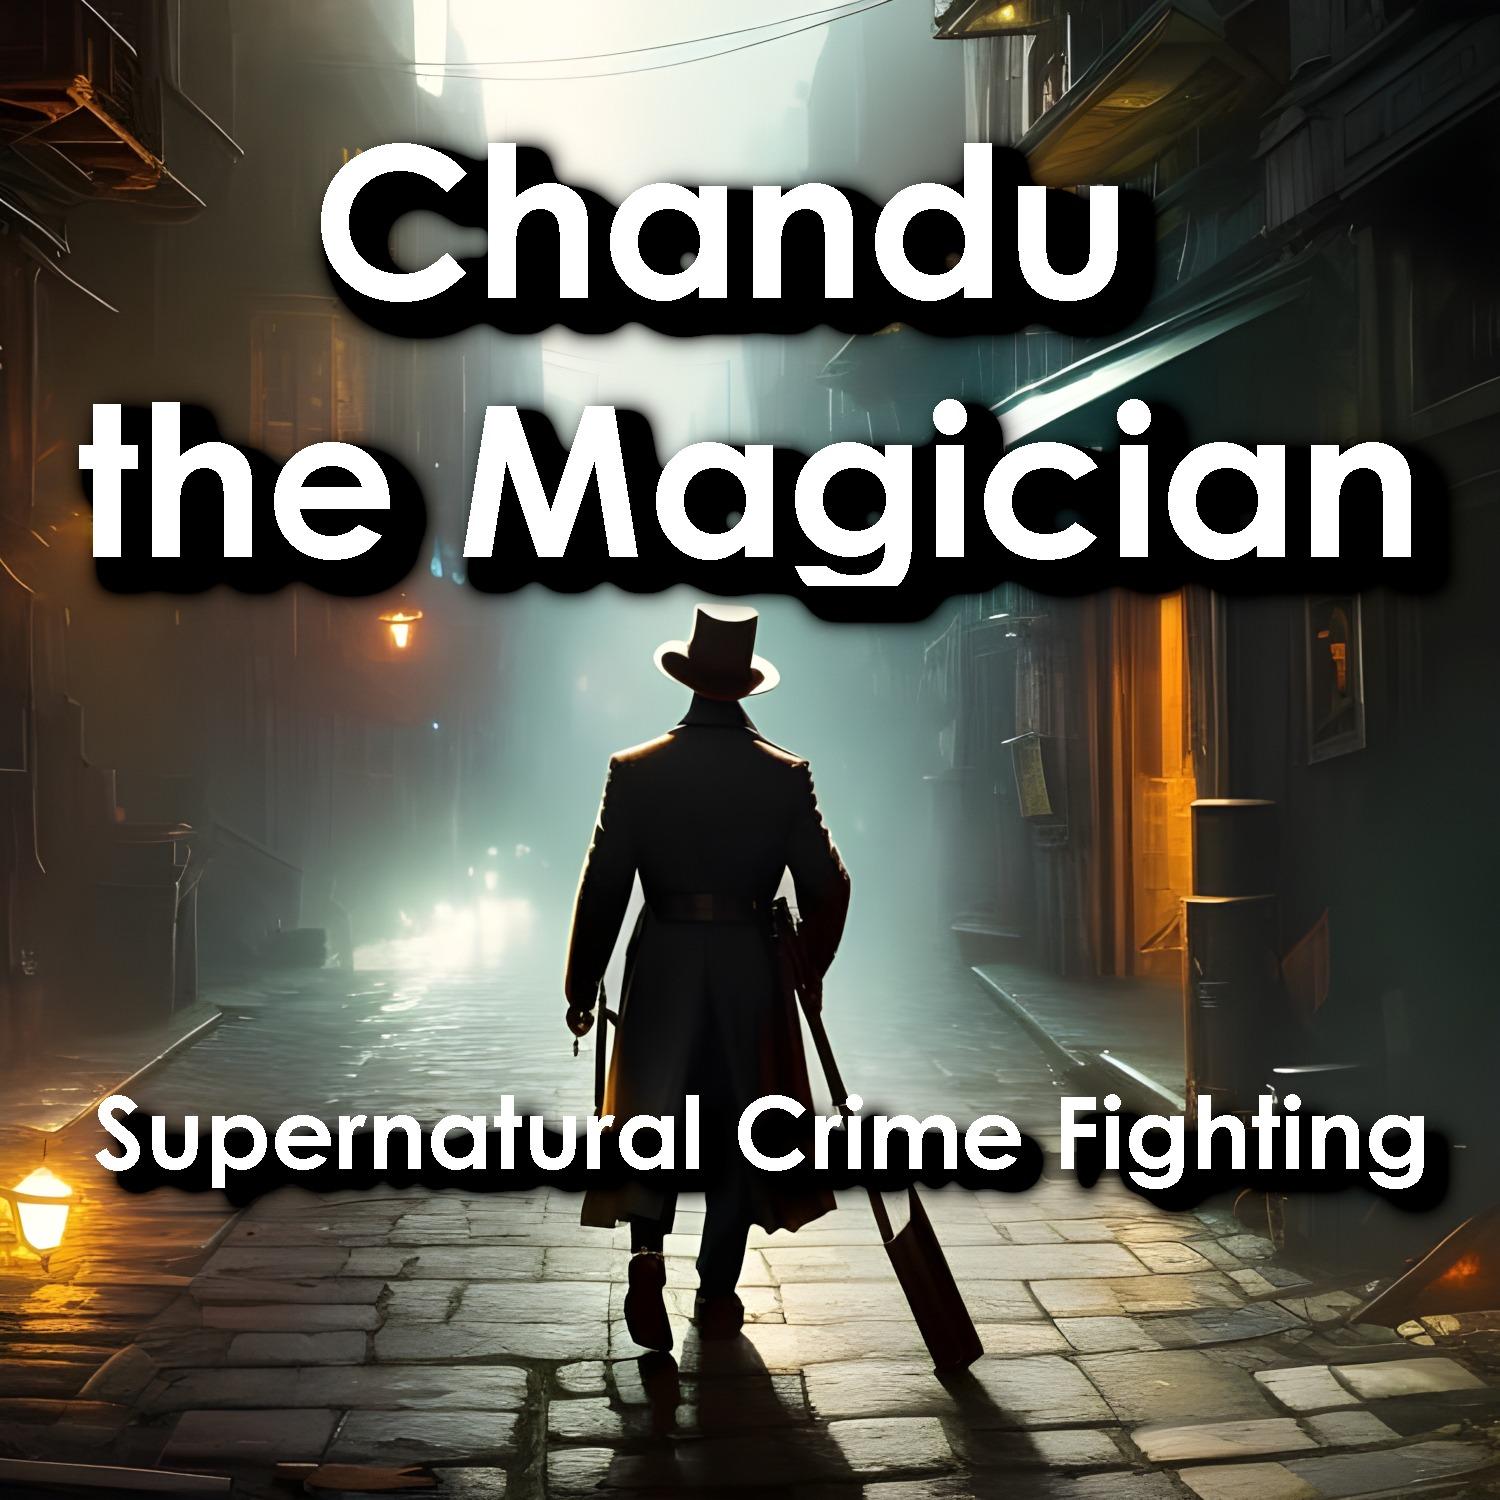 Supernatural Crime Fighting: Chandu the Magician